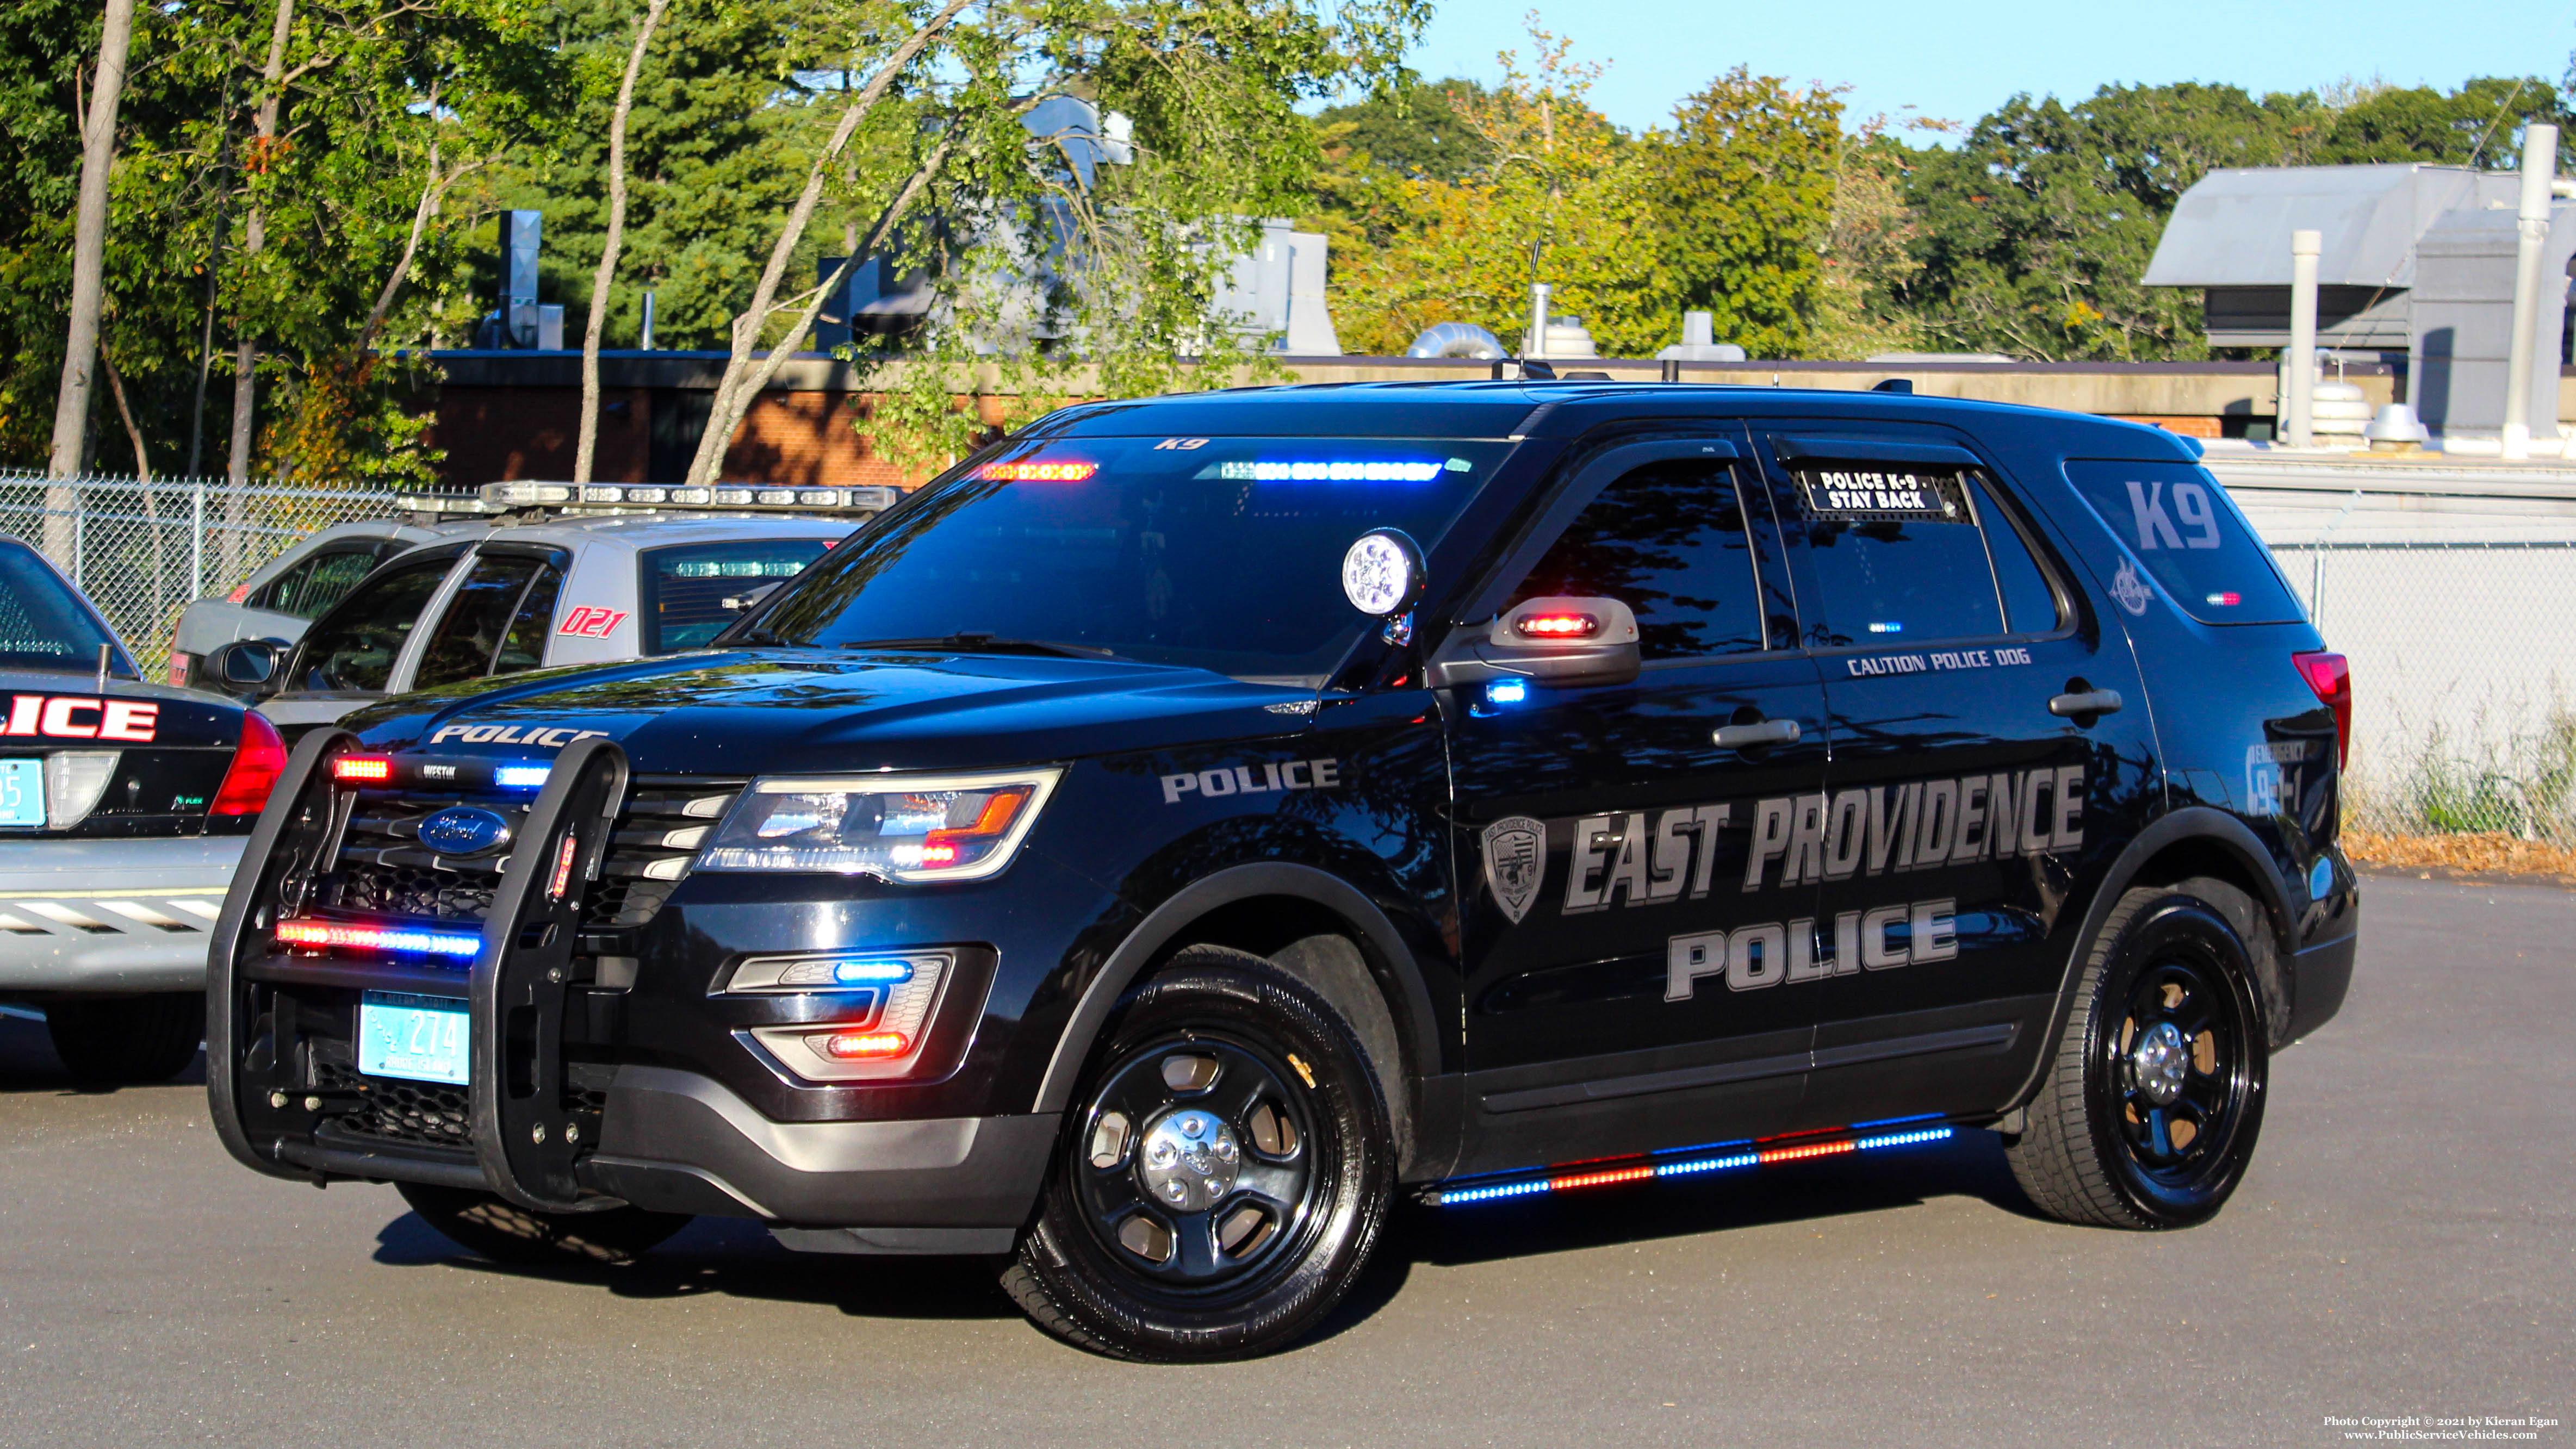 A photo  of East Providence Police
            Car [2]34, a 2017 Ford Police Interceptor Utility             taken by Kieran Egan